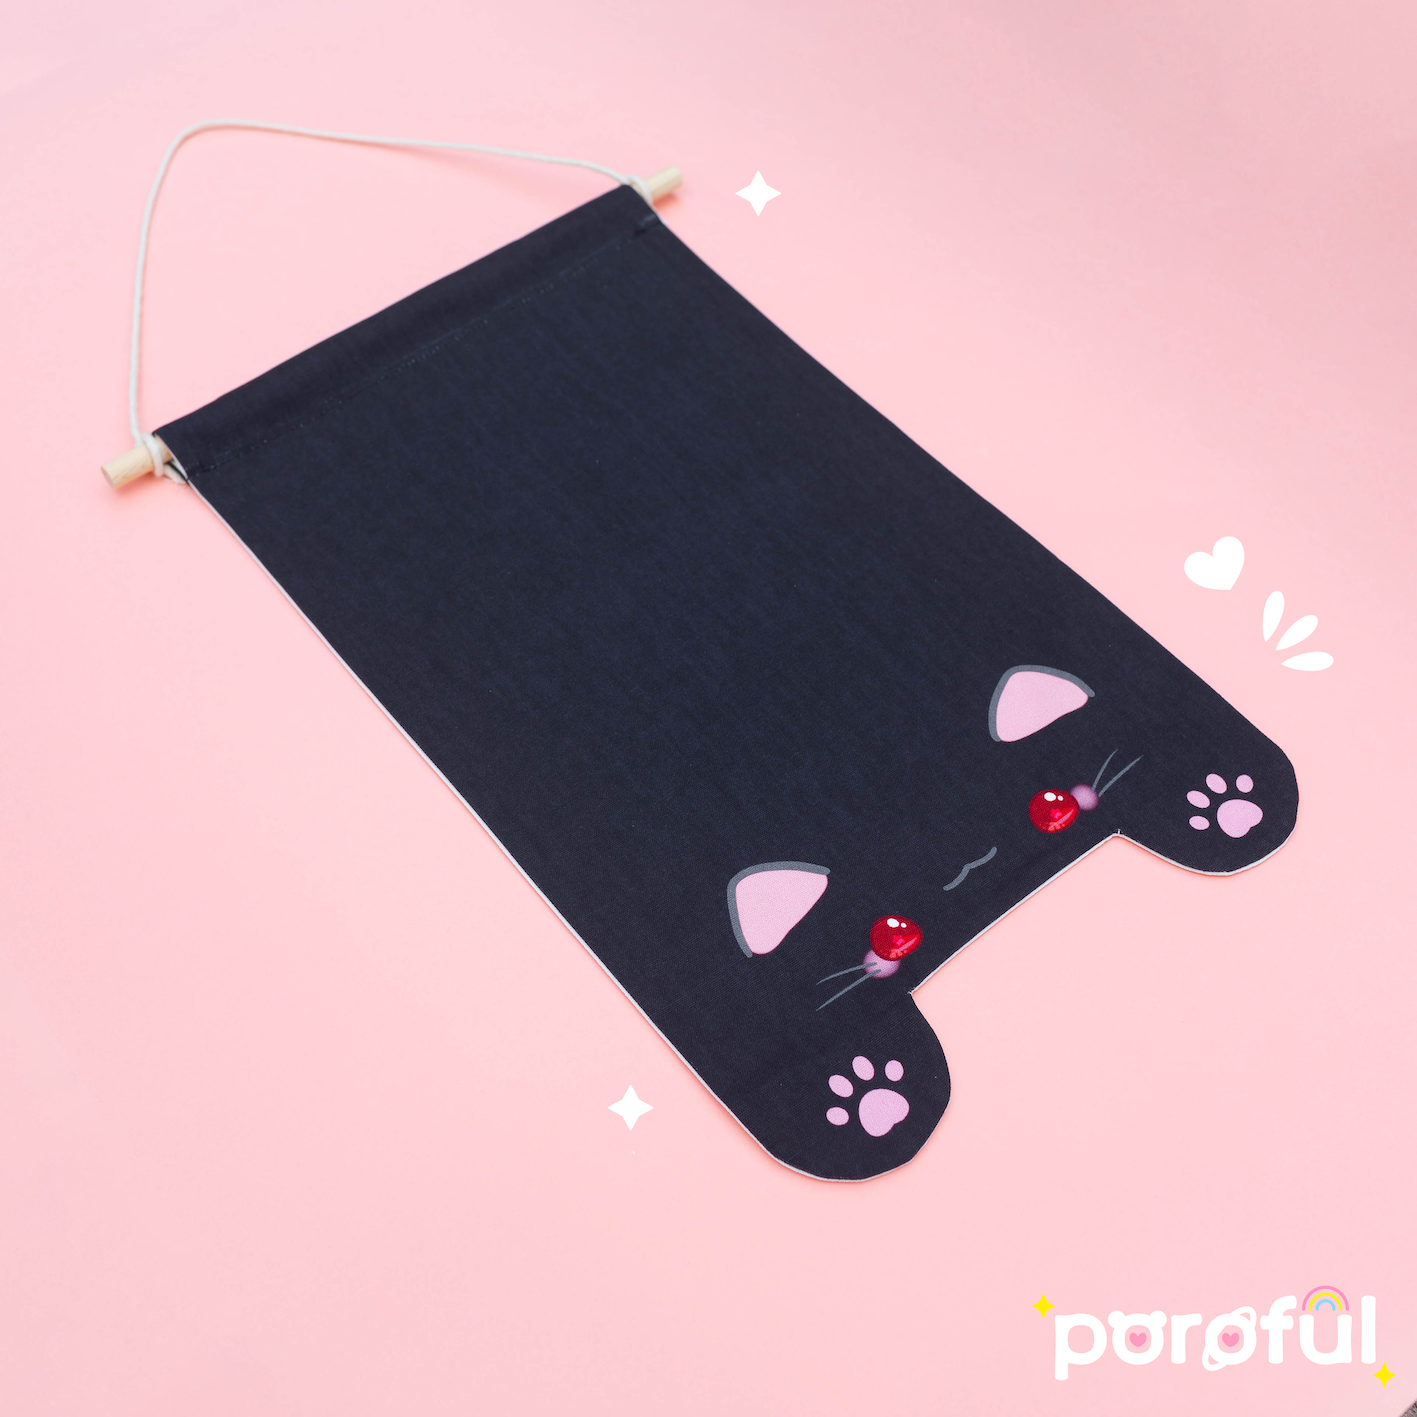 Black Cat Pin Banner (XL)